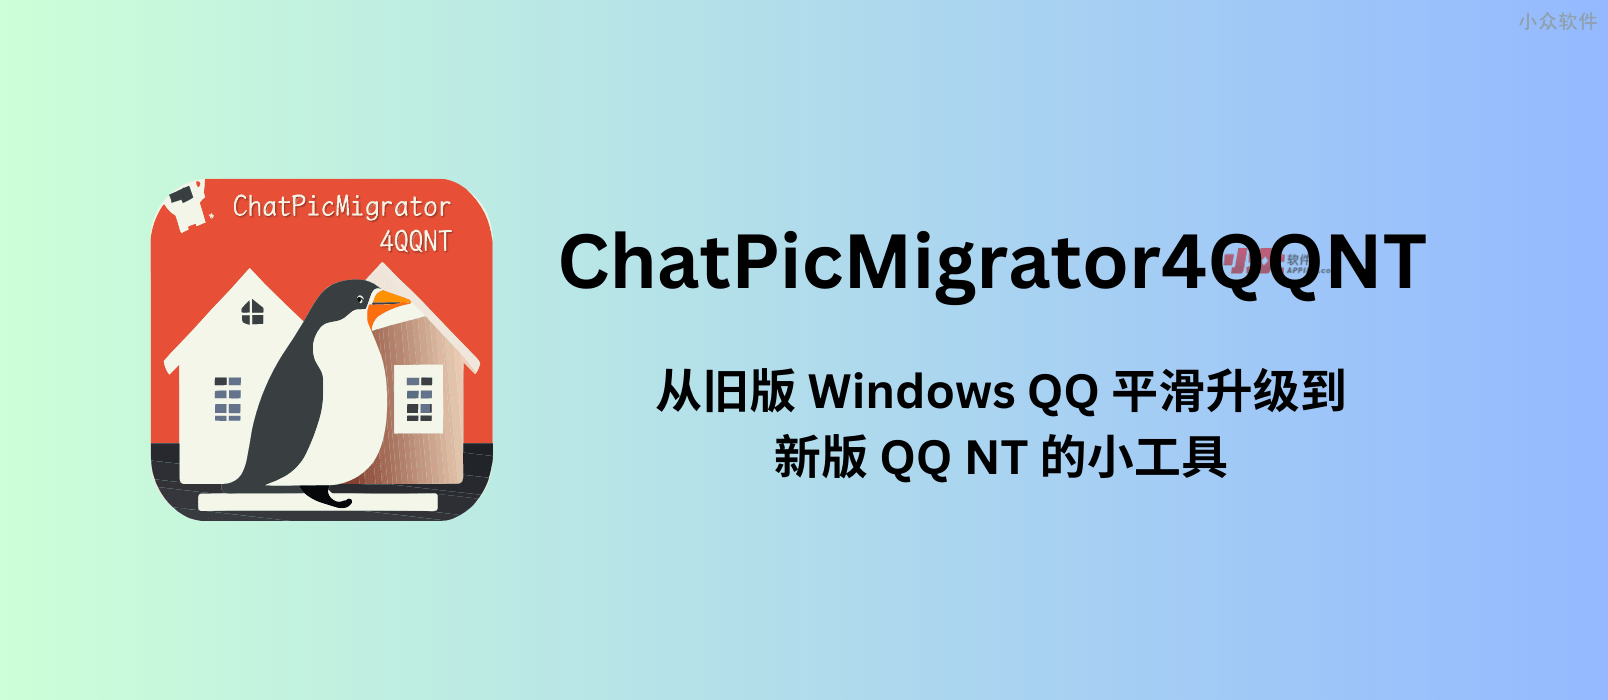 ChatPicMigrator4QQNT - 从旧版 Windows QQ 平滑升级到新版 QQ NT 的小工具